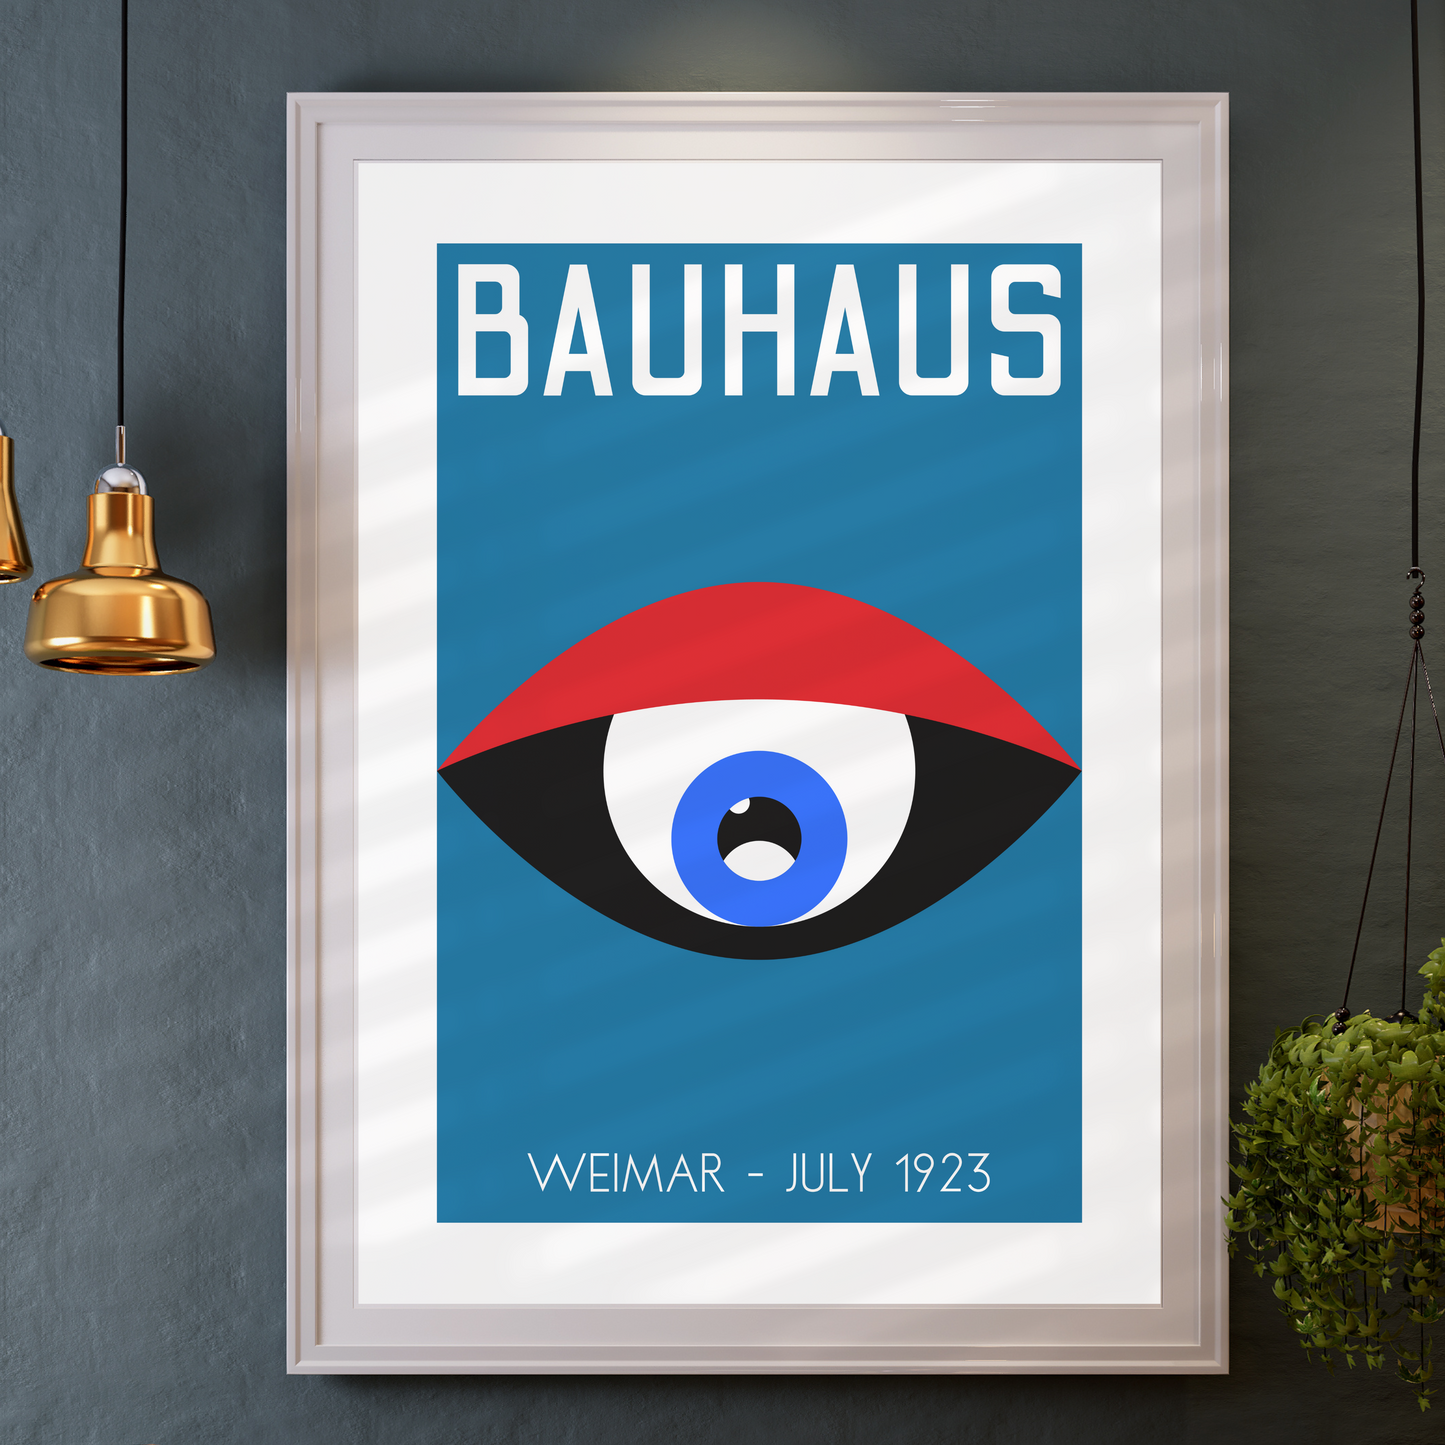 Bauhaus Exhibition, Blue & Red Eye, Art Print, A3/A4/A5 Sizes